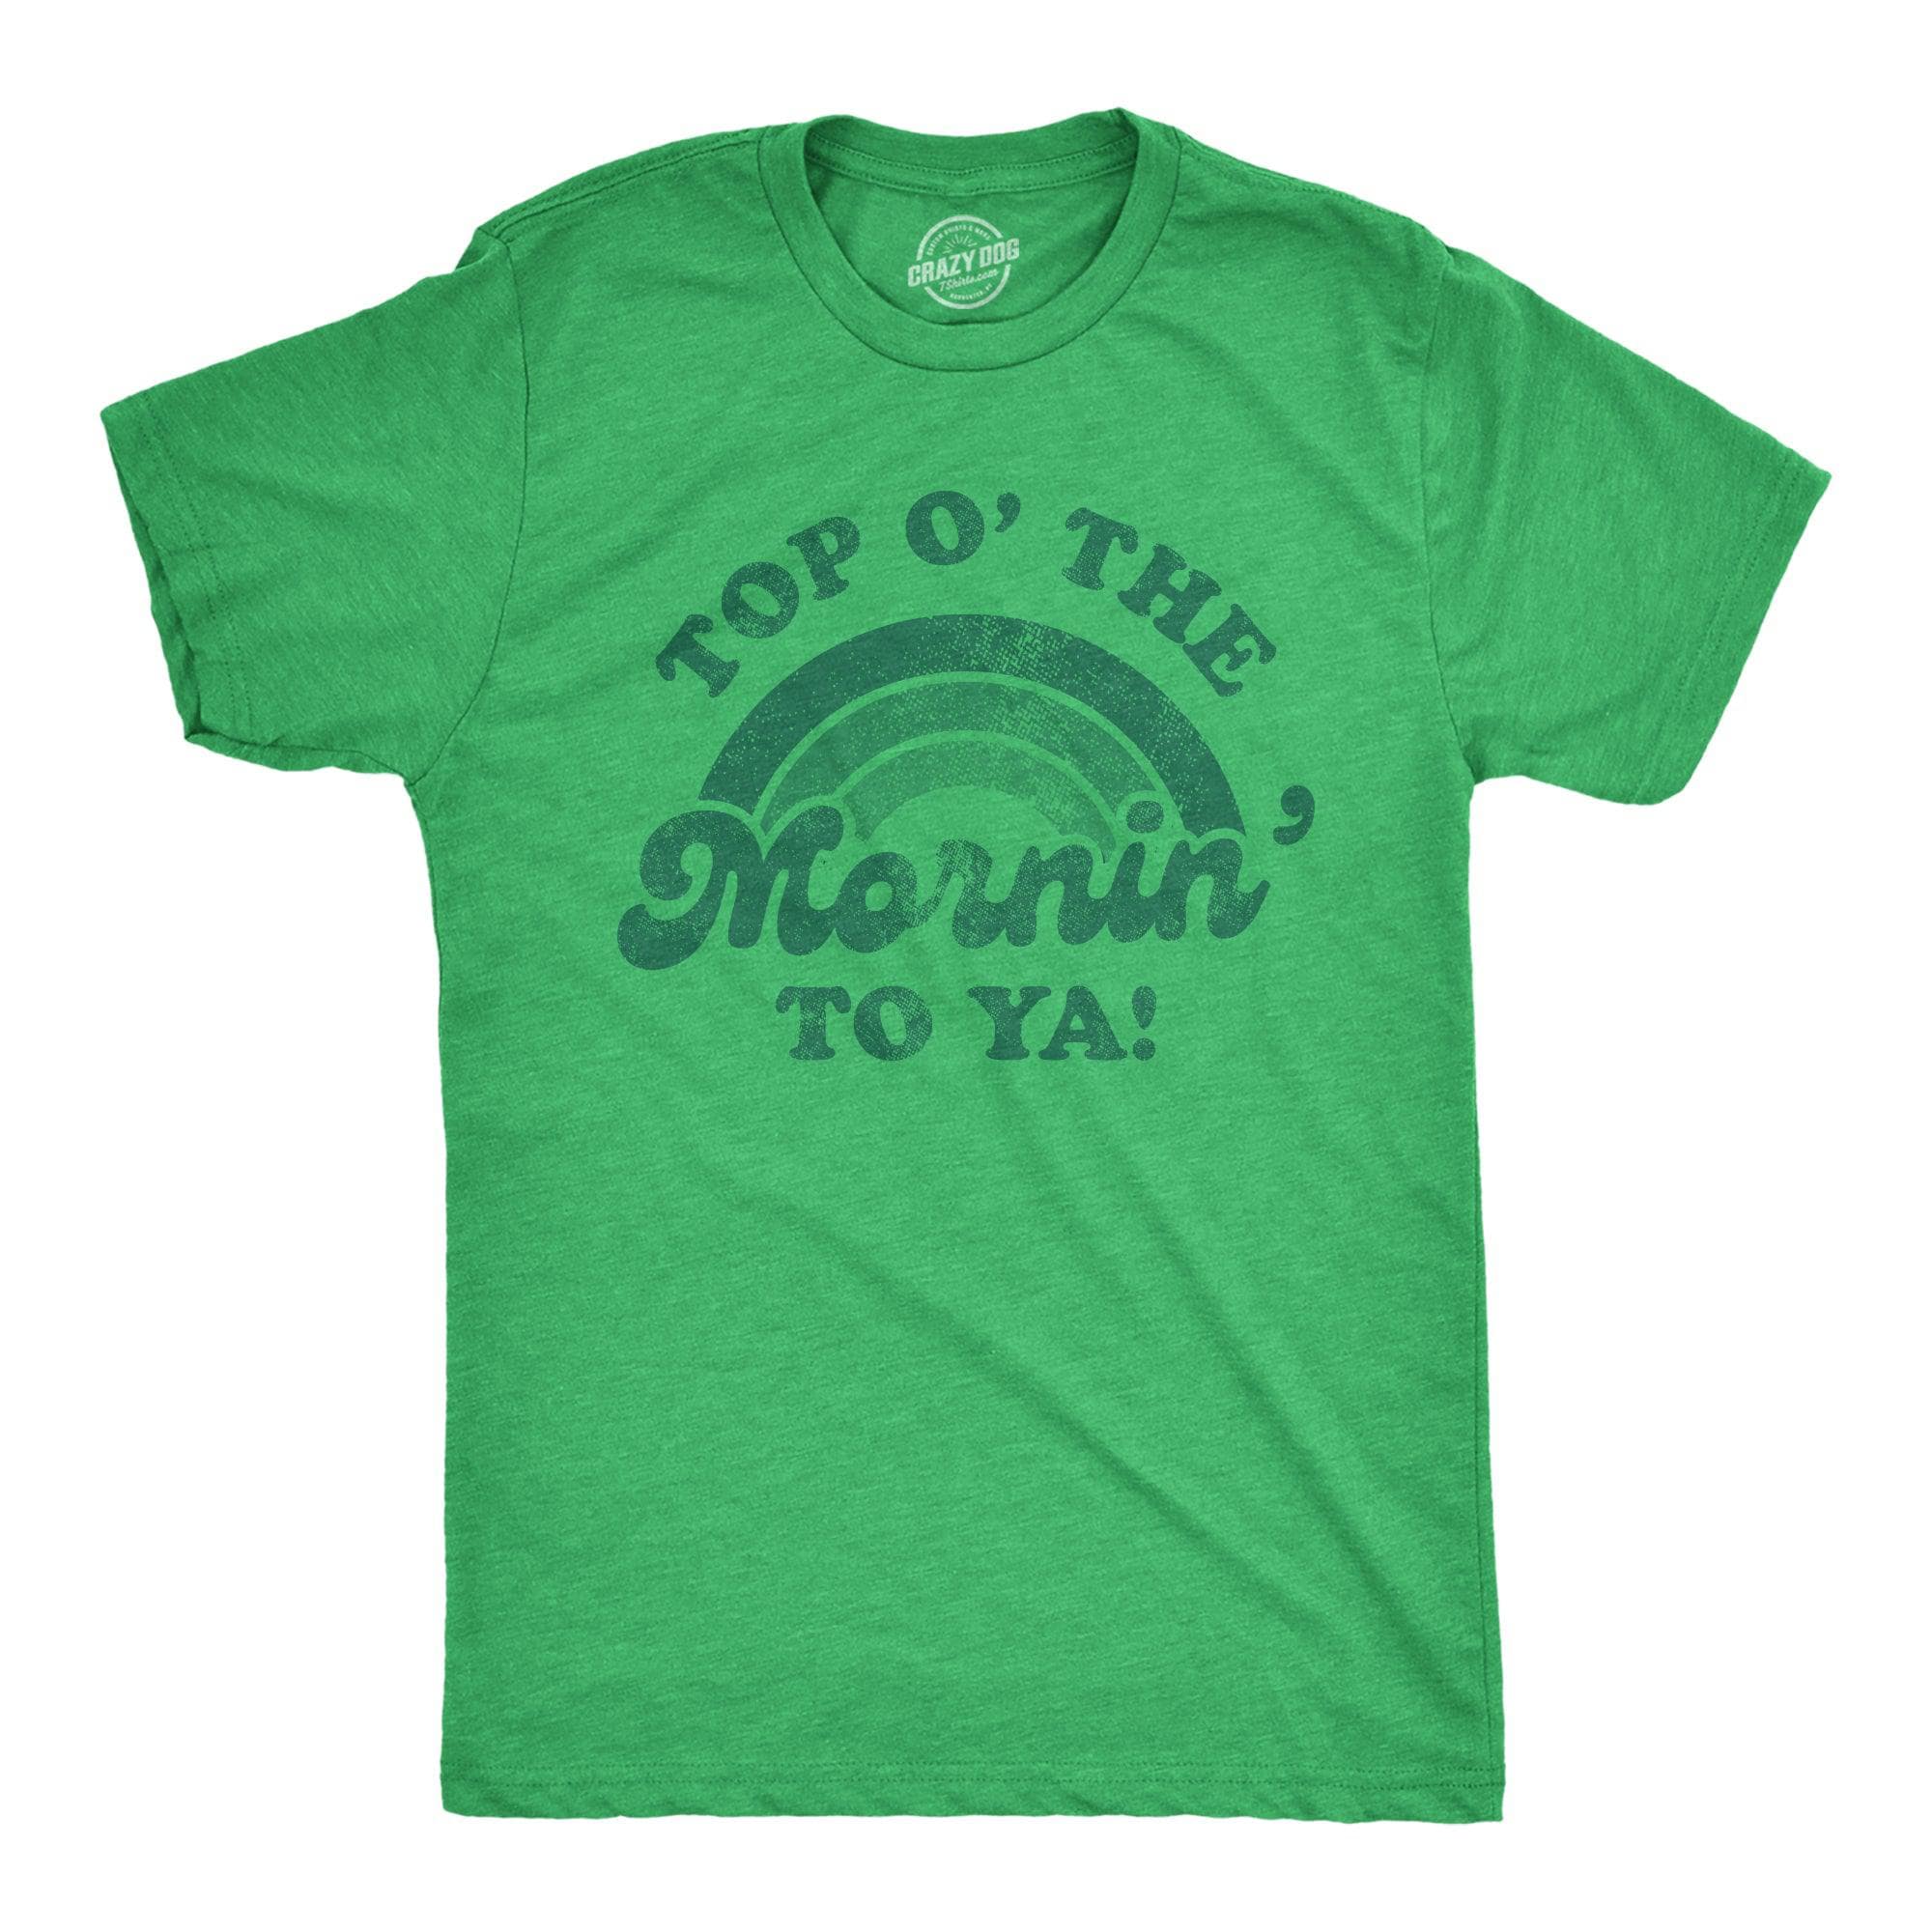 Top O' The Mornin' To Ya Men's Tshirt  -  Crazy Dog T-Shirts